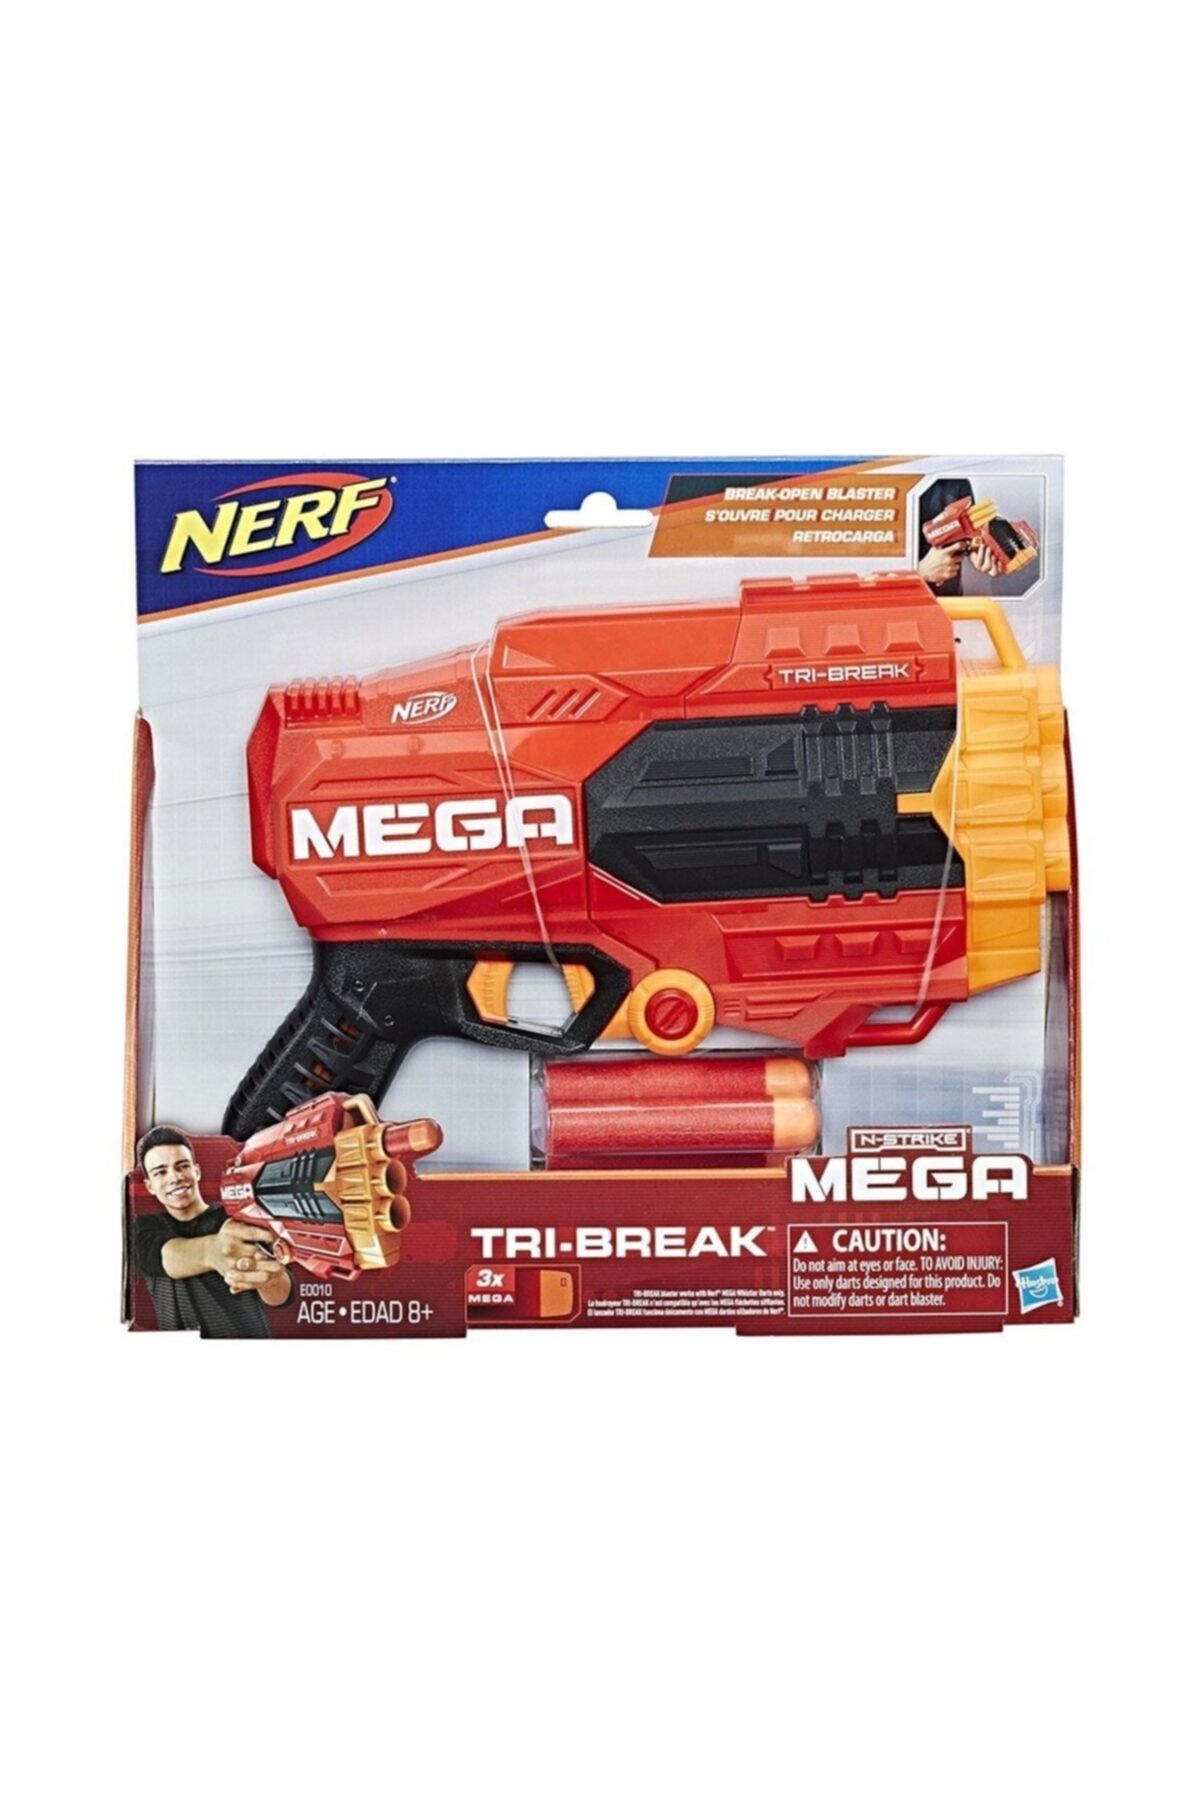 Nerf N-strike Mega Tri-break E0103